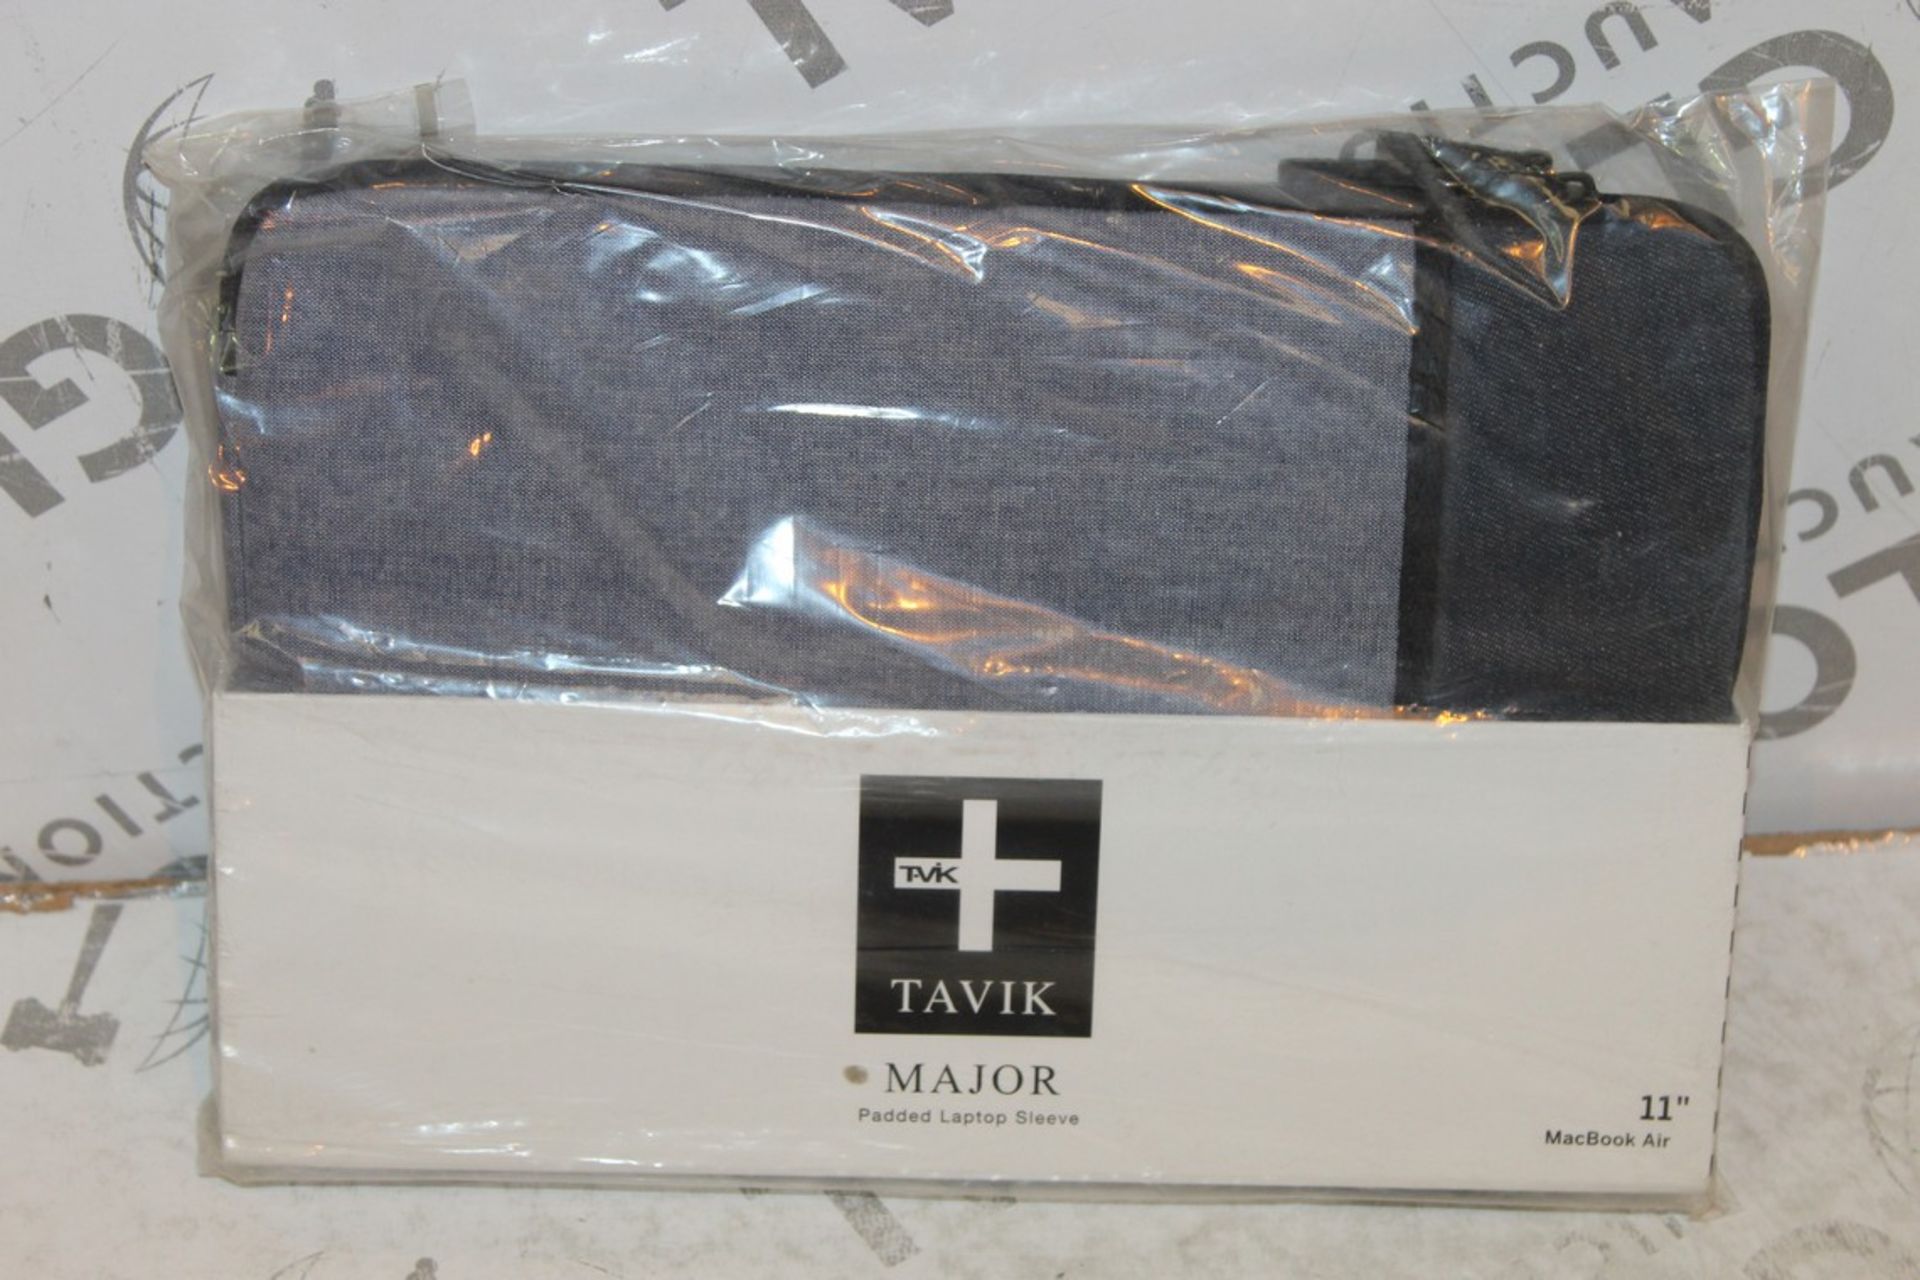 Lot to Contain 3 Brand New Taviq major 13" MacBook Air Macbook Pro Combined RRP £120